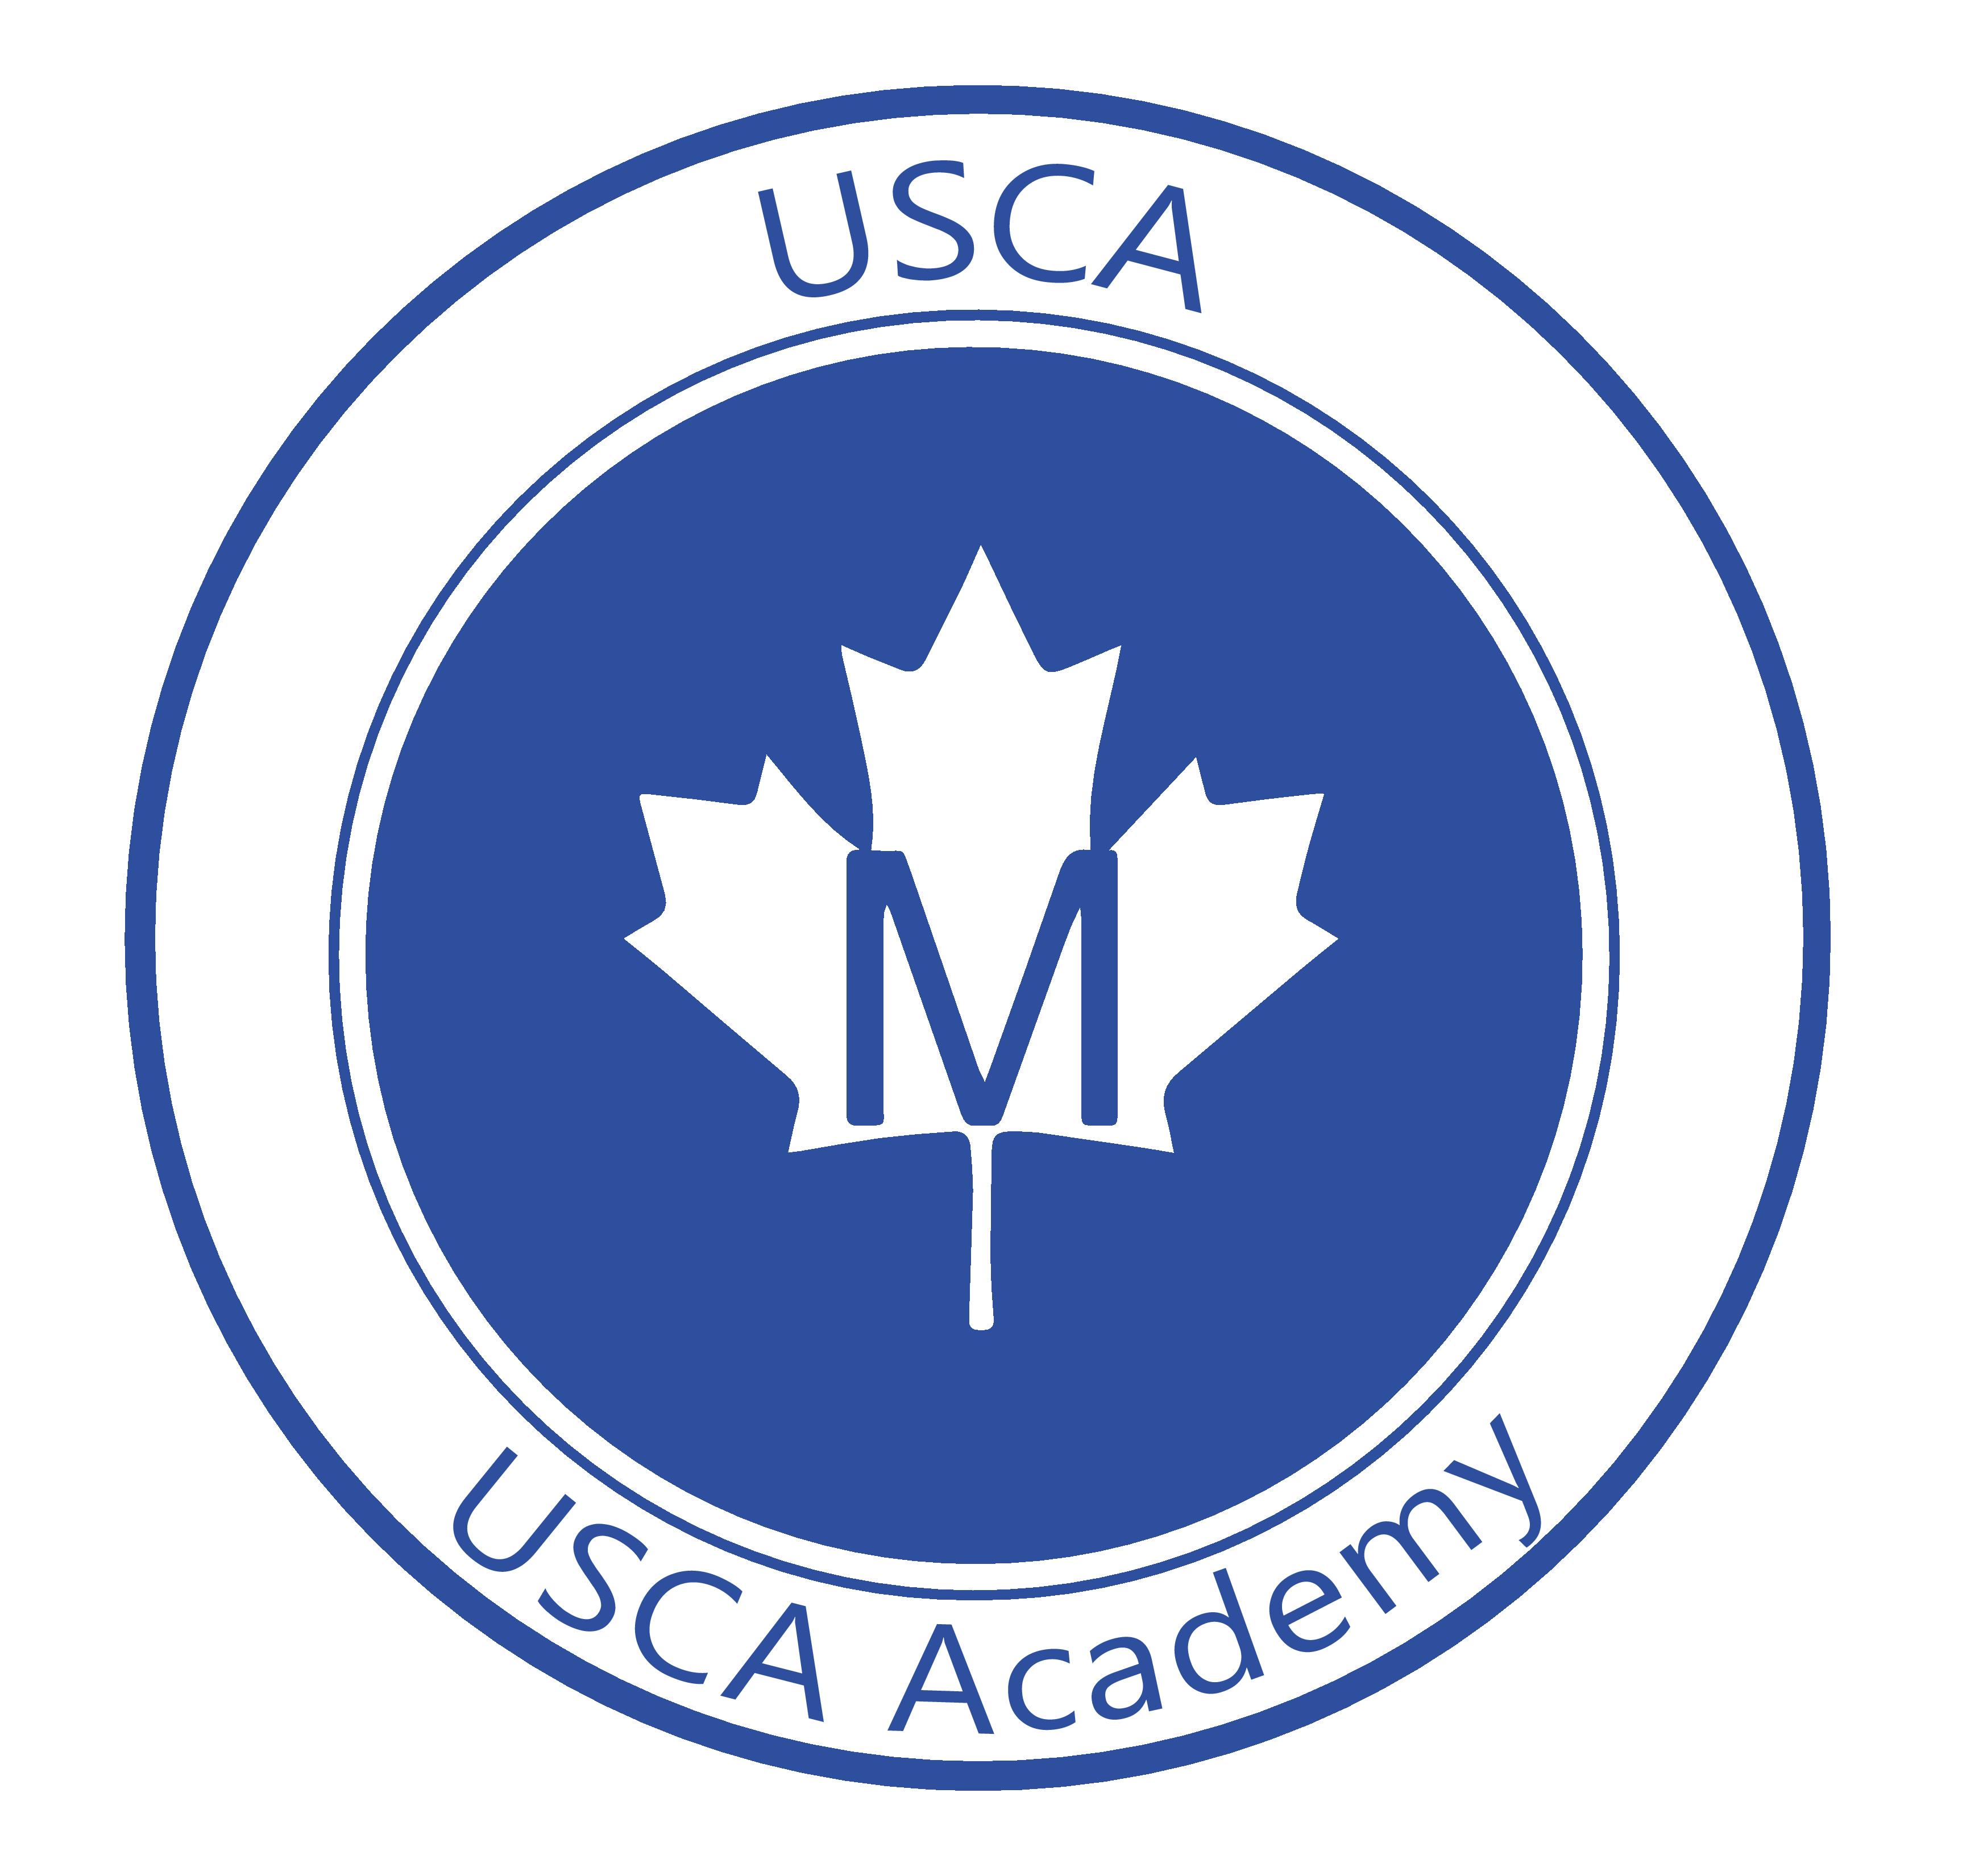 USCA Academy International